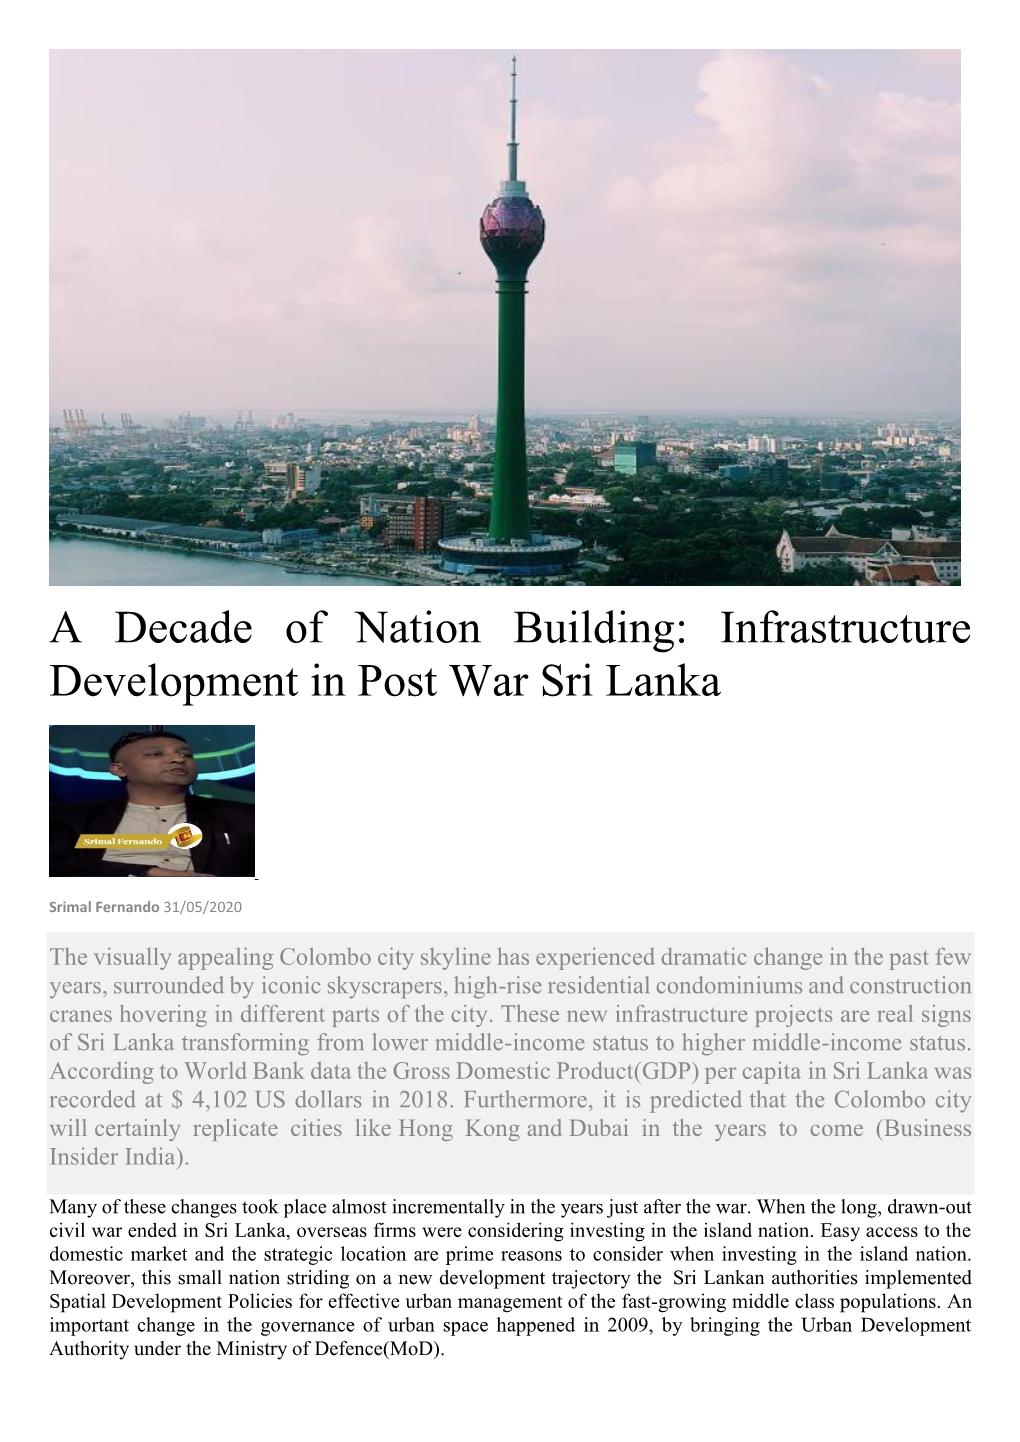 Infrastructure Development in Post War Sri Lanka